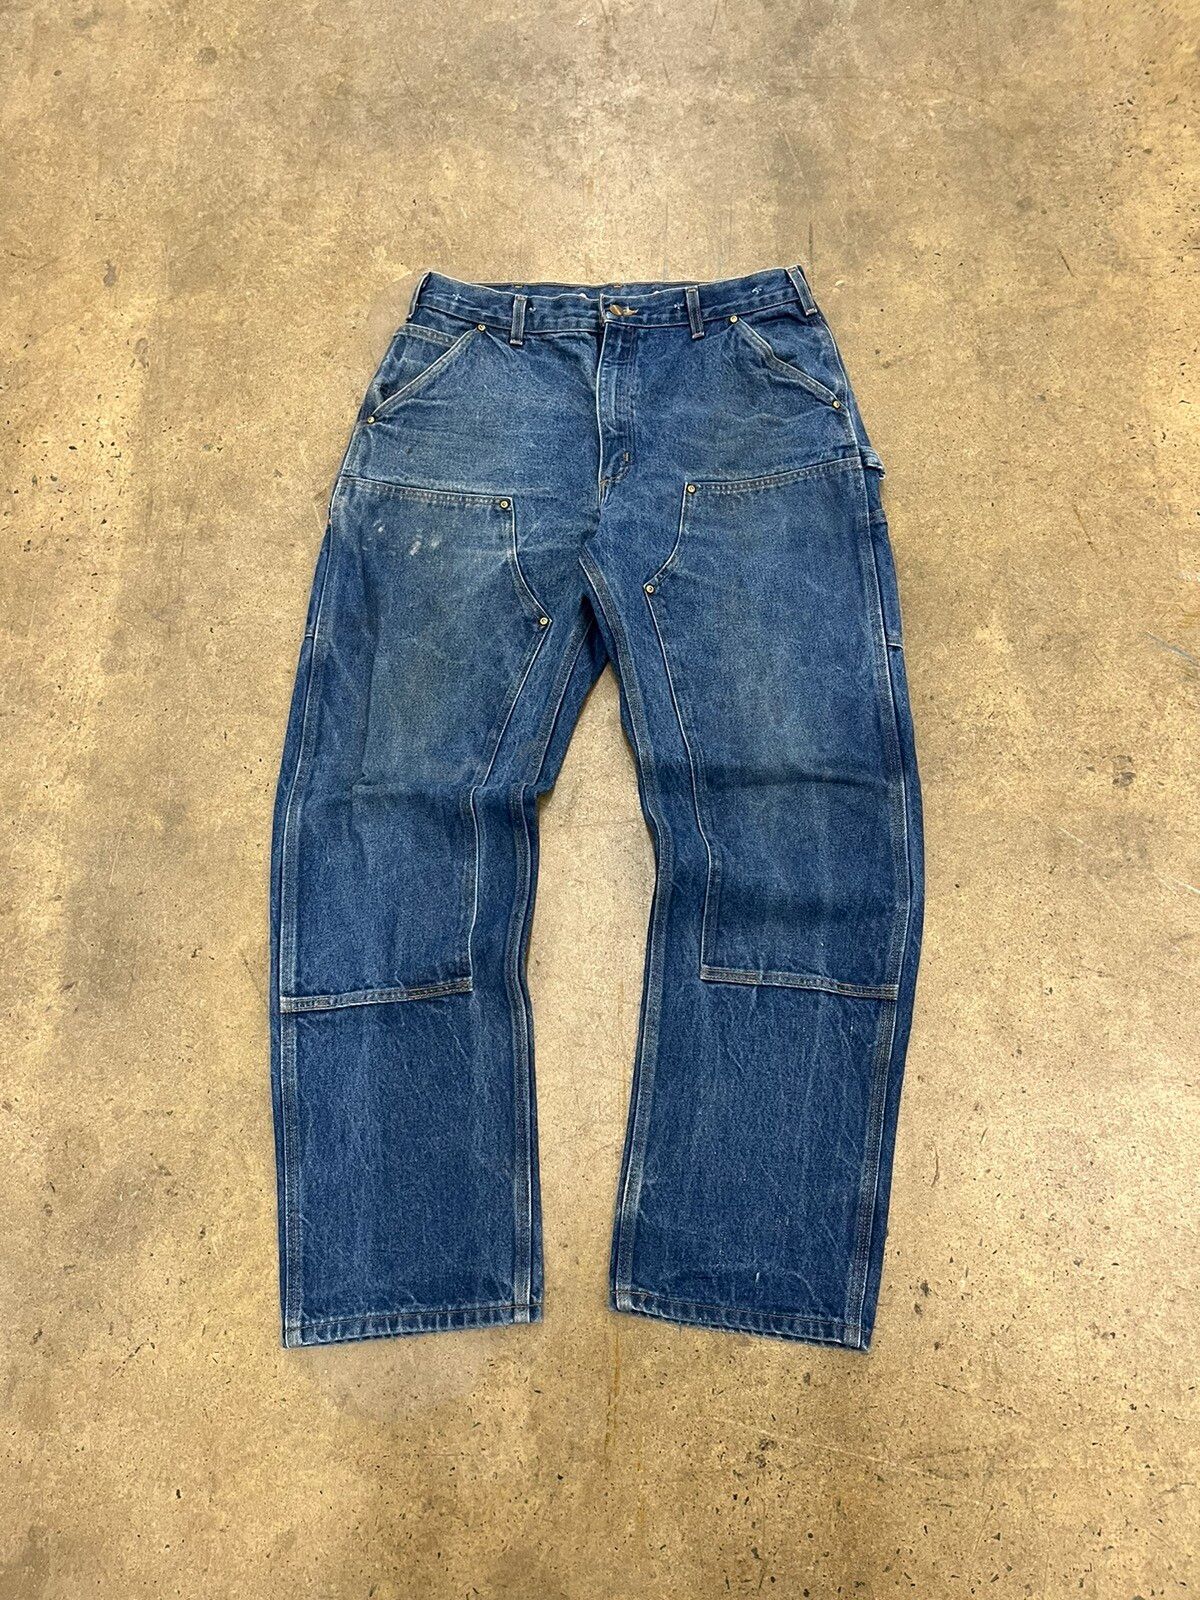 Pre-owned Carhartt X Vintage Carhartt Denim Double Knee Pants Size 36x34 In Blue